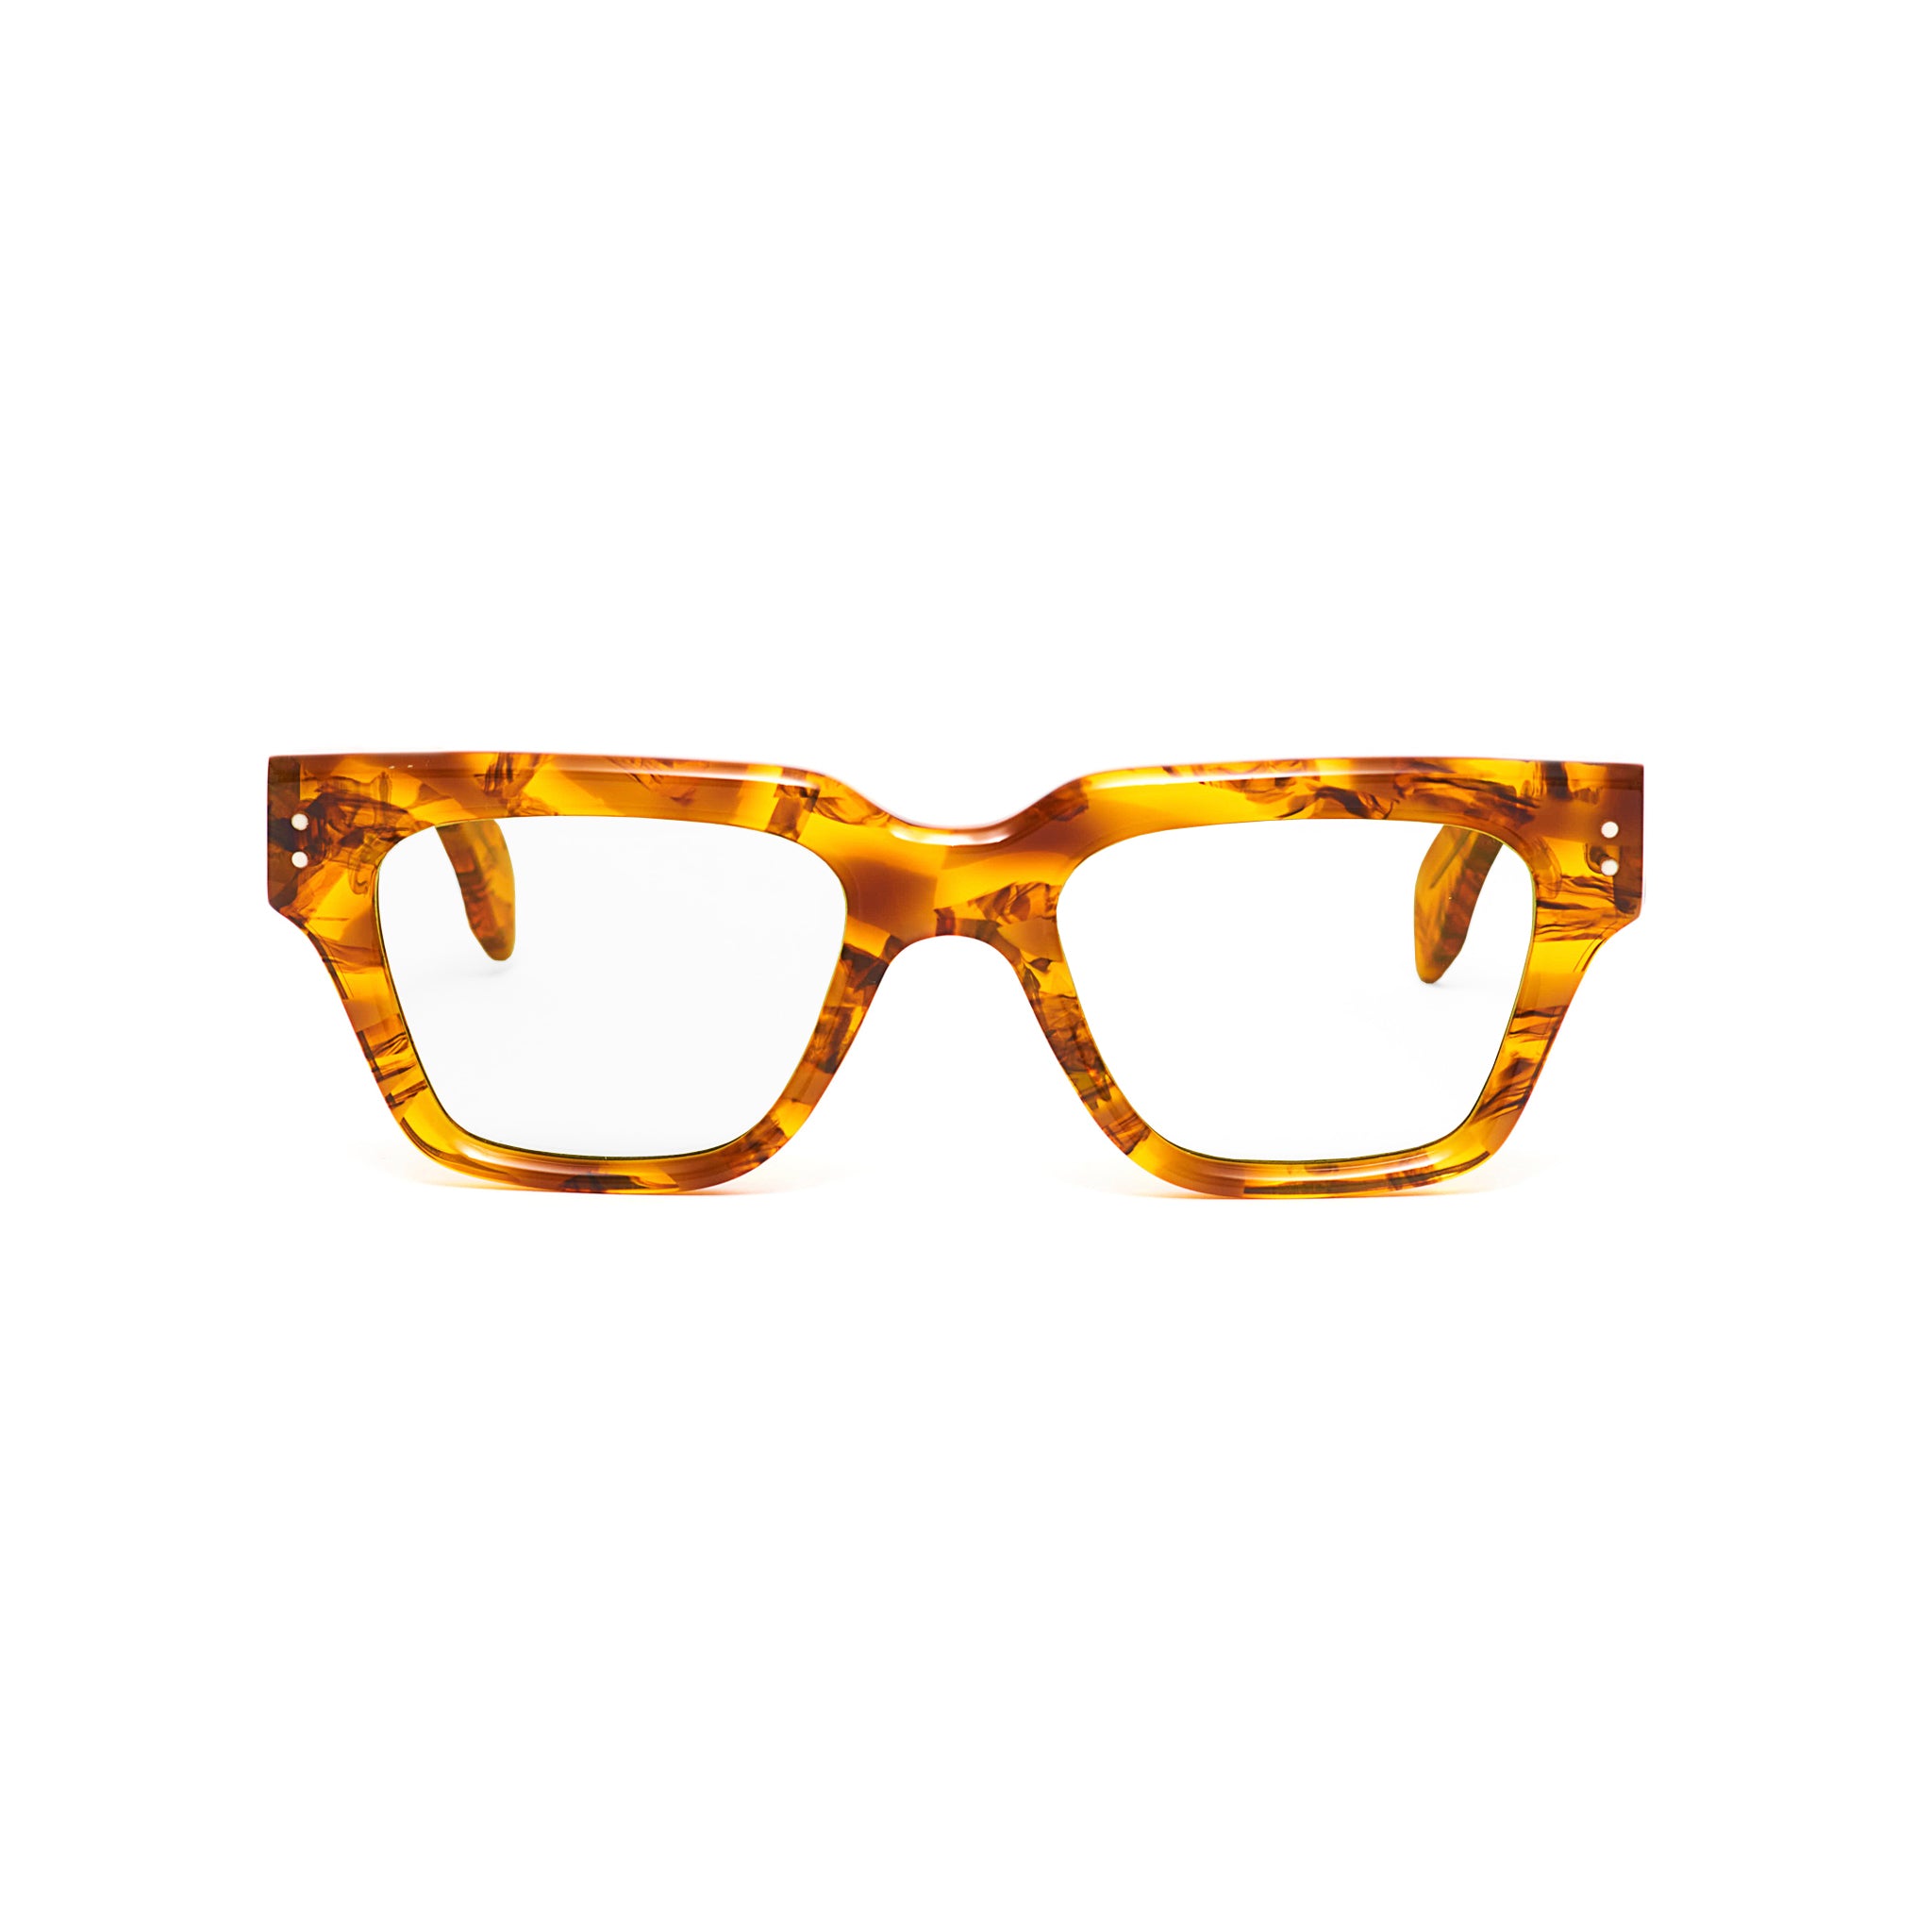 ameos eyewear emery optical glasses in tortoise frames. Unisex and hadmade in Italy.